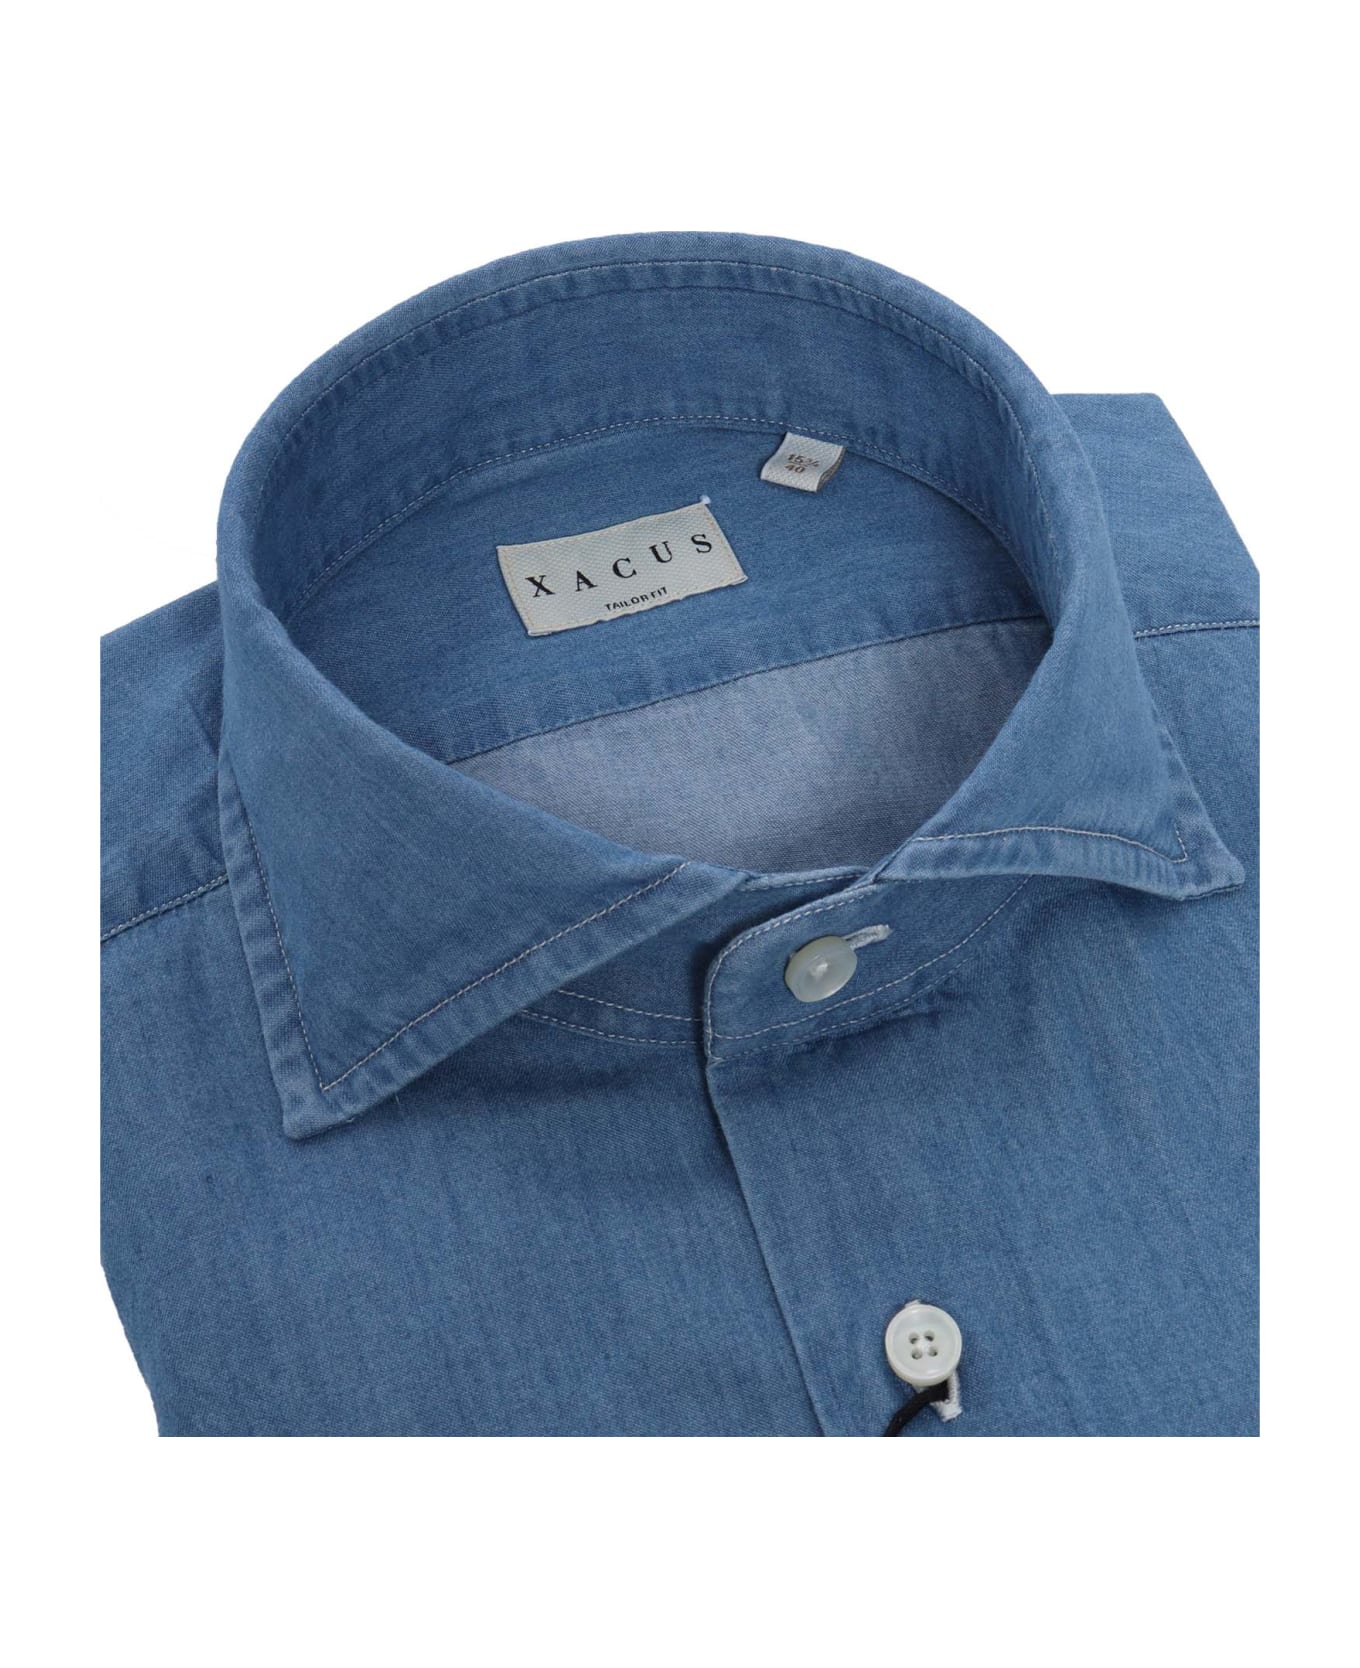 Xacus Blue Cotton Shirt - BLUE